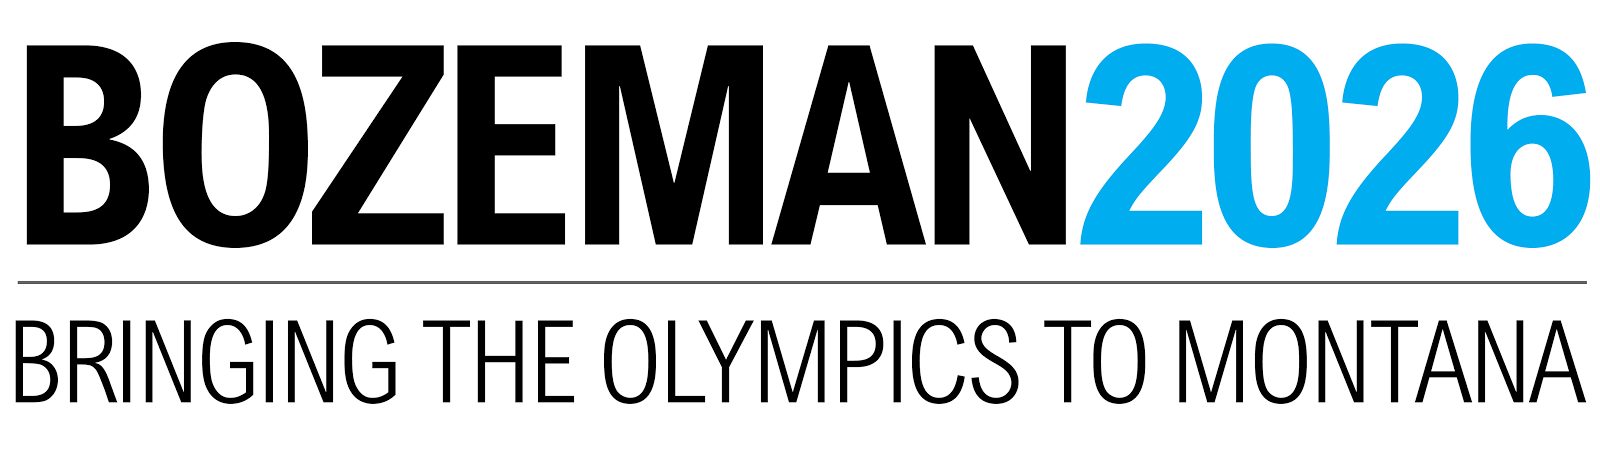 bozeman-2026-winter-olympics-imagine-bozeman-olympics-2026